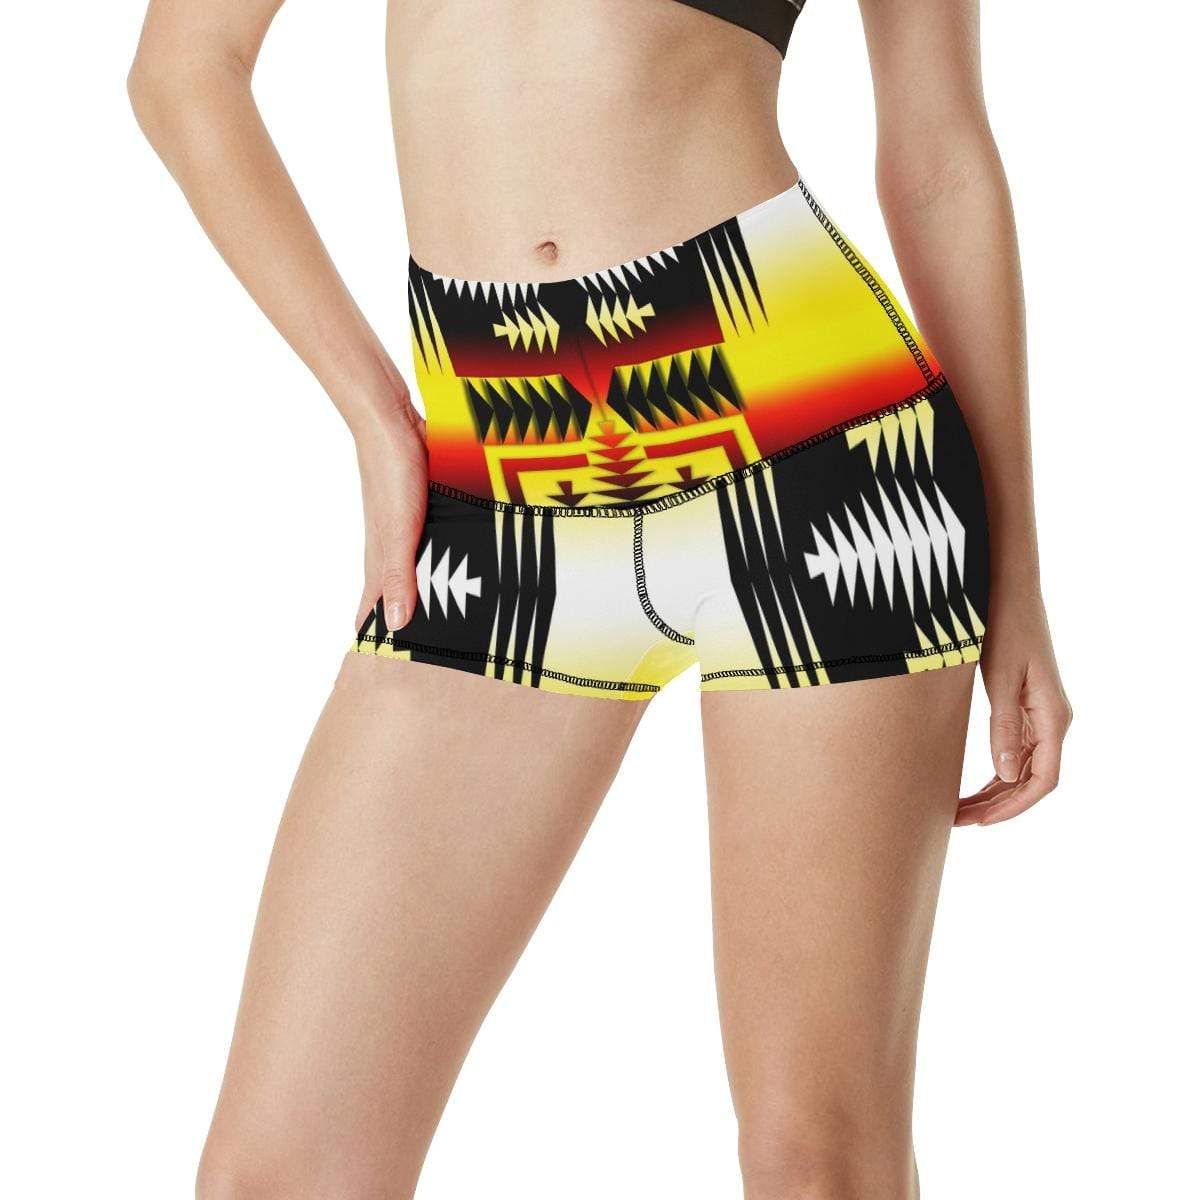 KS-QON BENG Rose Gold Zebra Skin Yoga Shorts with Pockets for